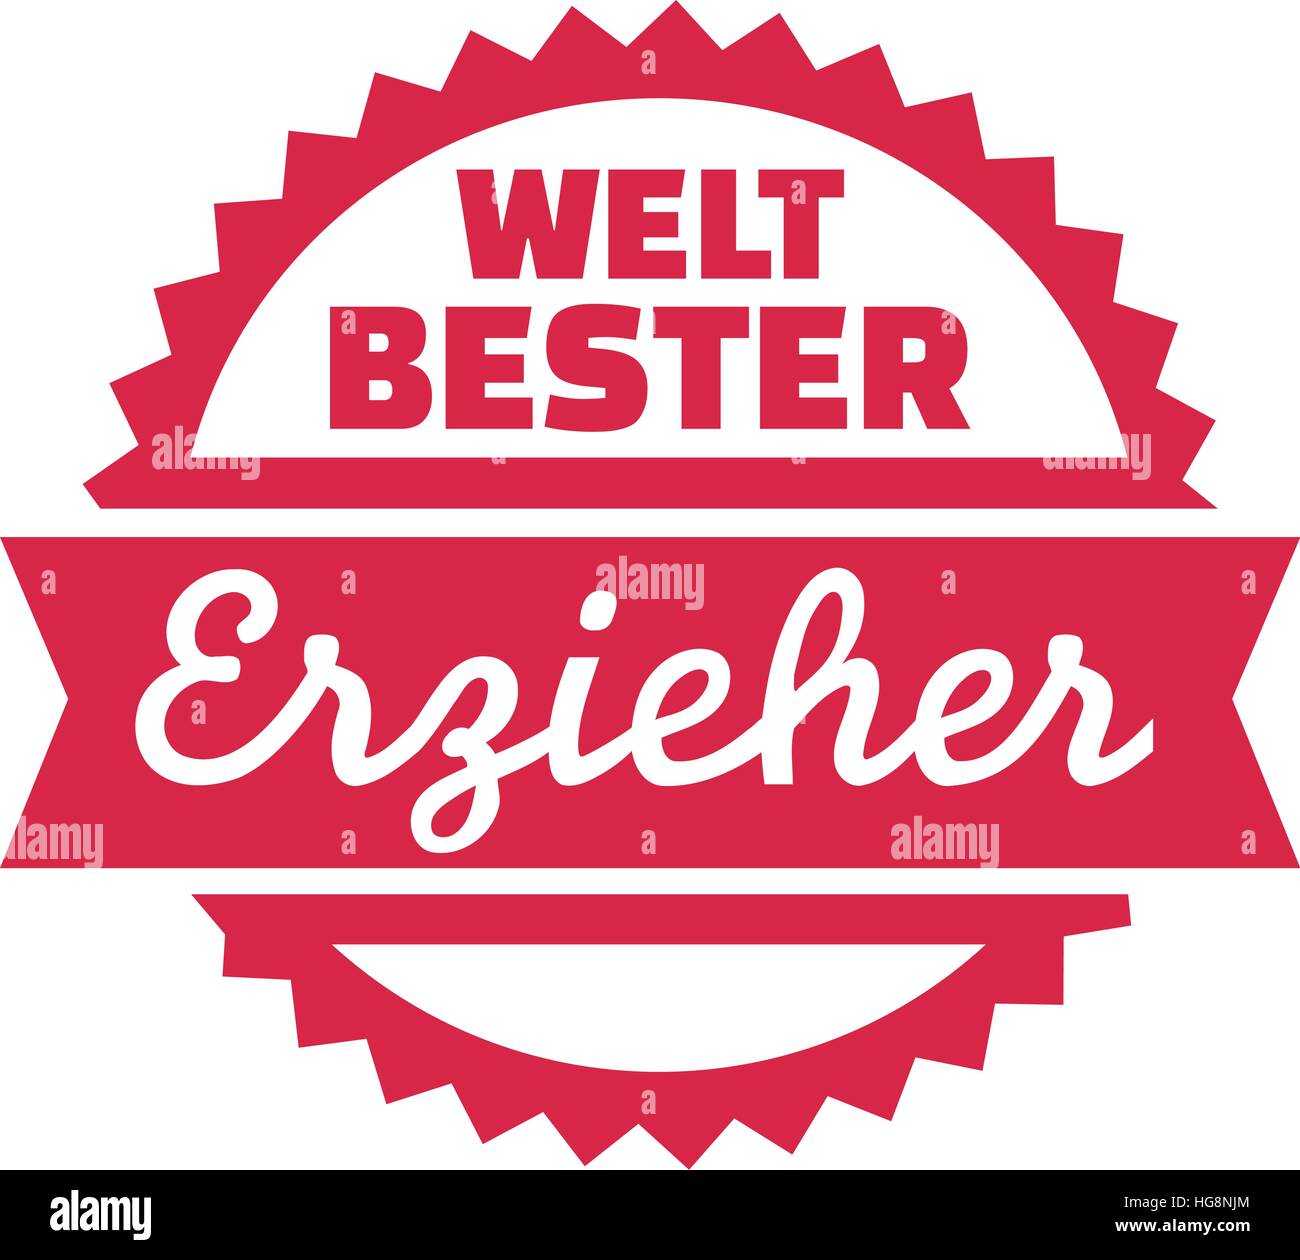 World's best educator - german Stock Vector